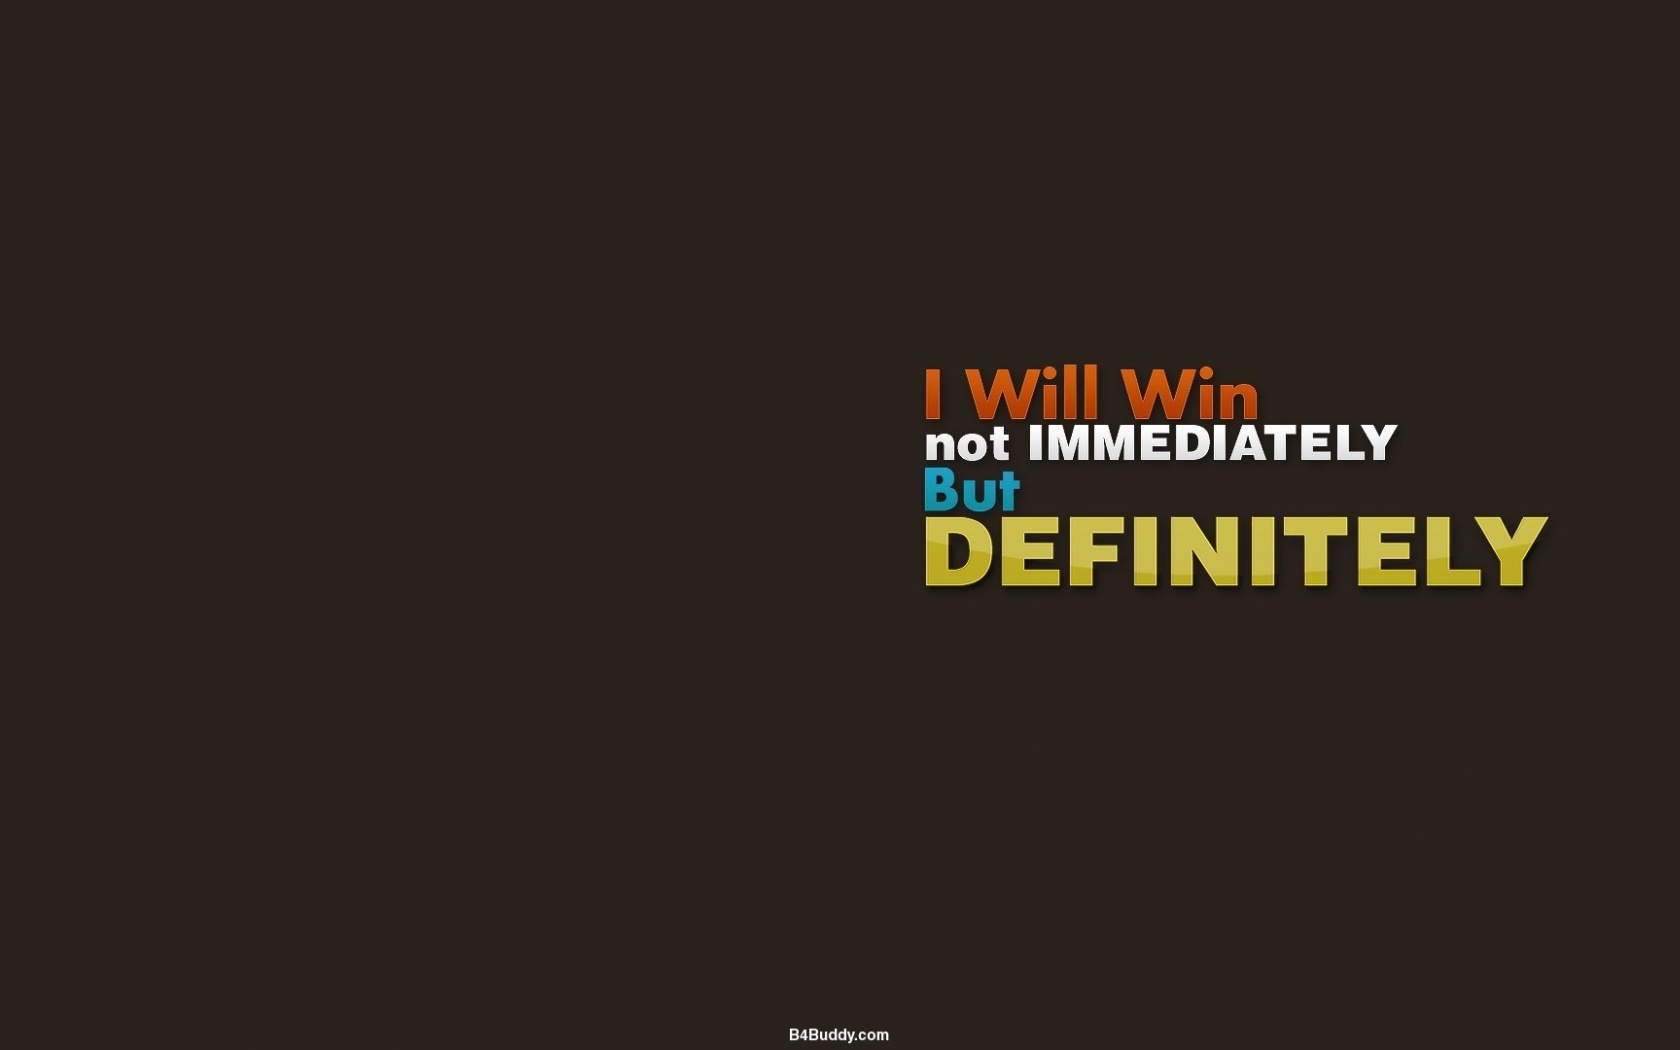 Inspirational Quotes Wallpaper For Desktop QuotesGram